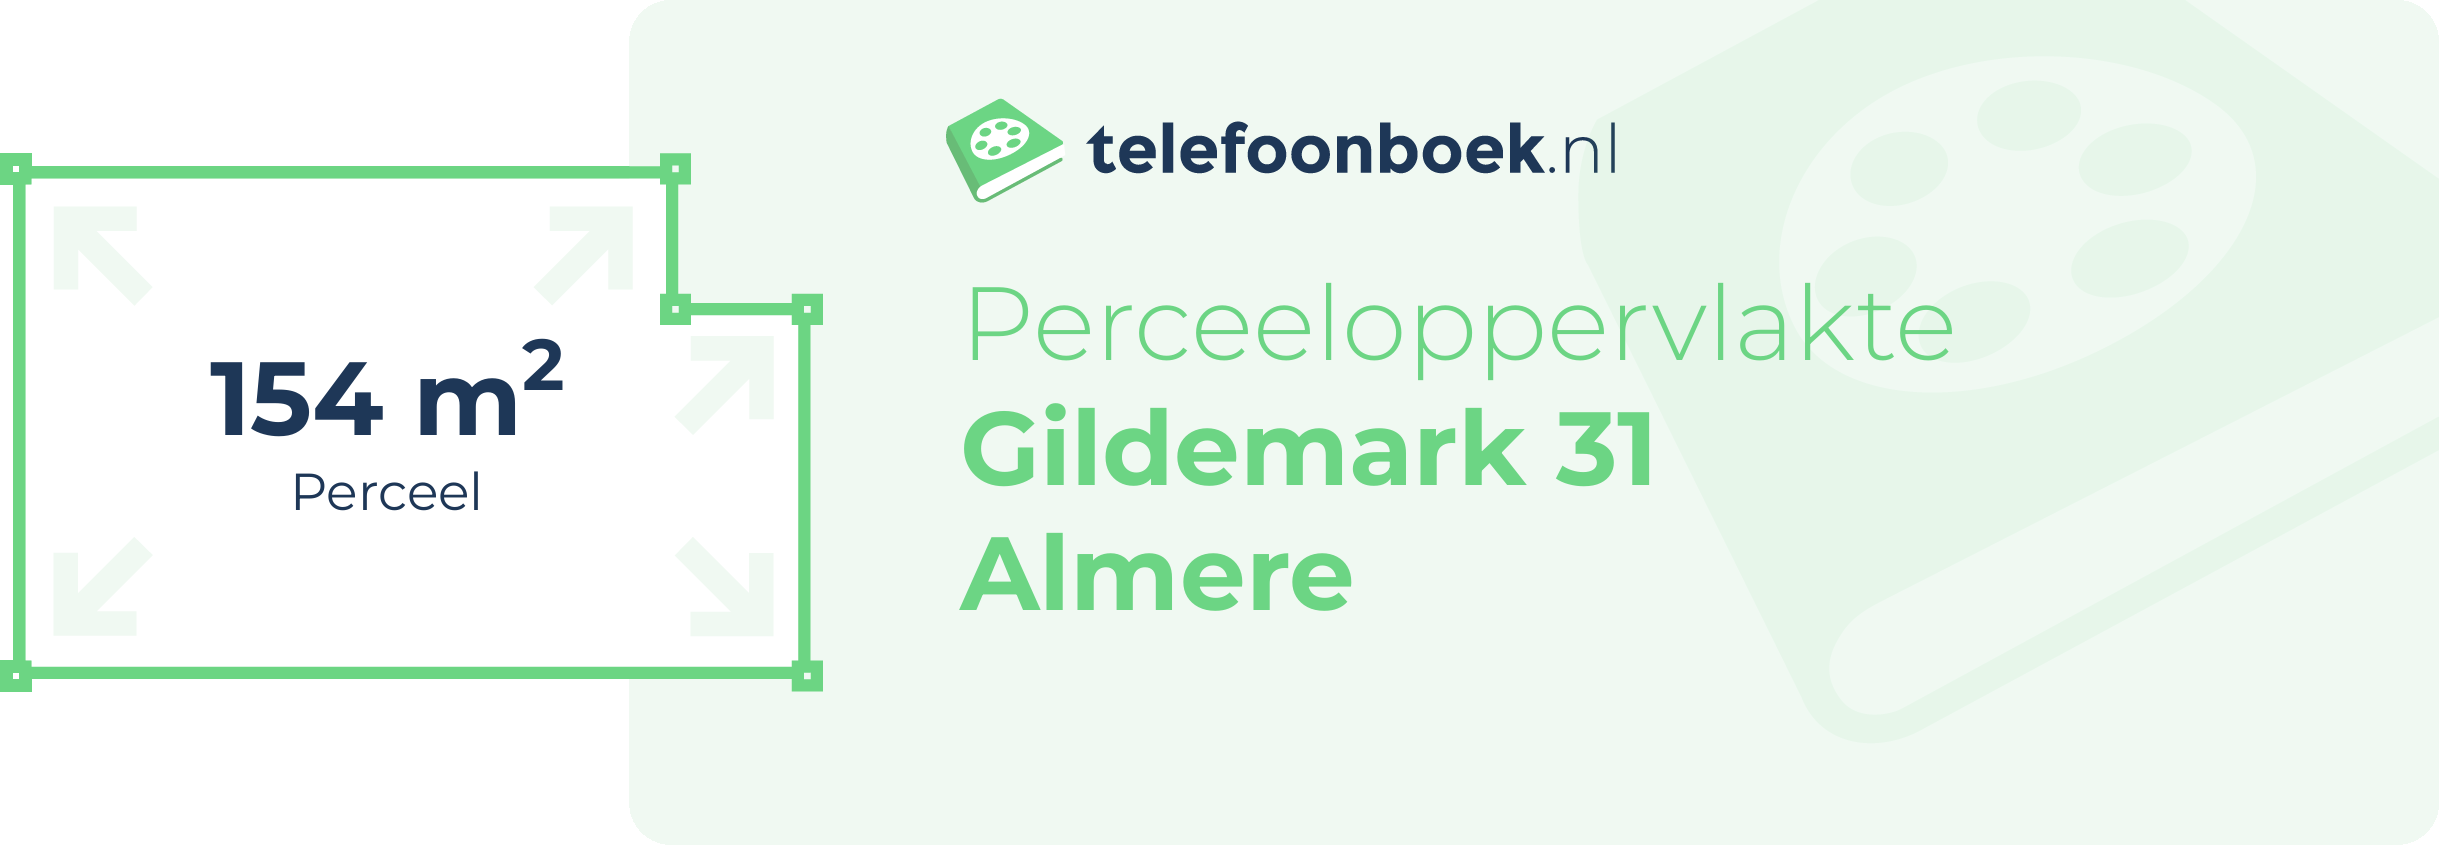 Perceeloppervlakte Gildemark 31 Almere